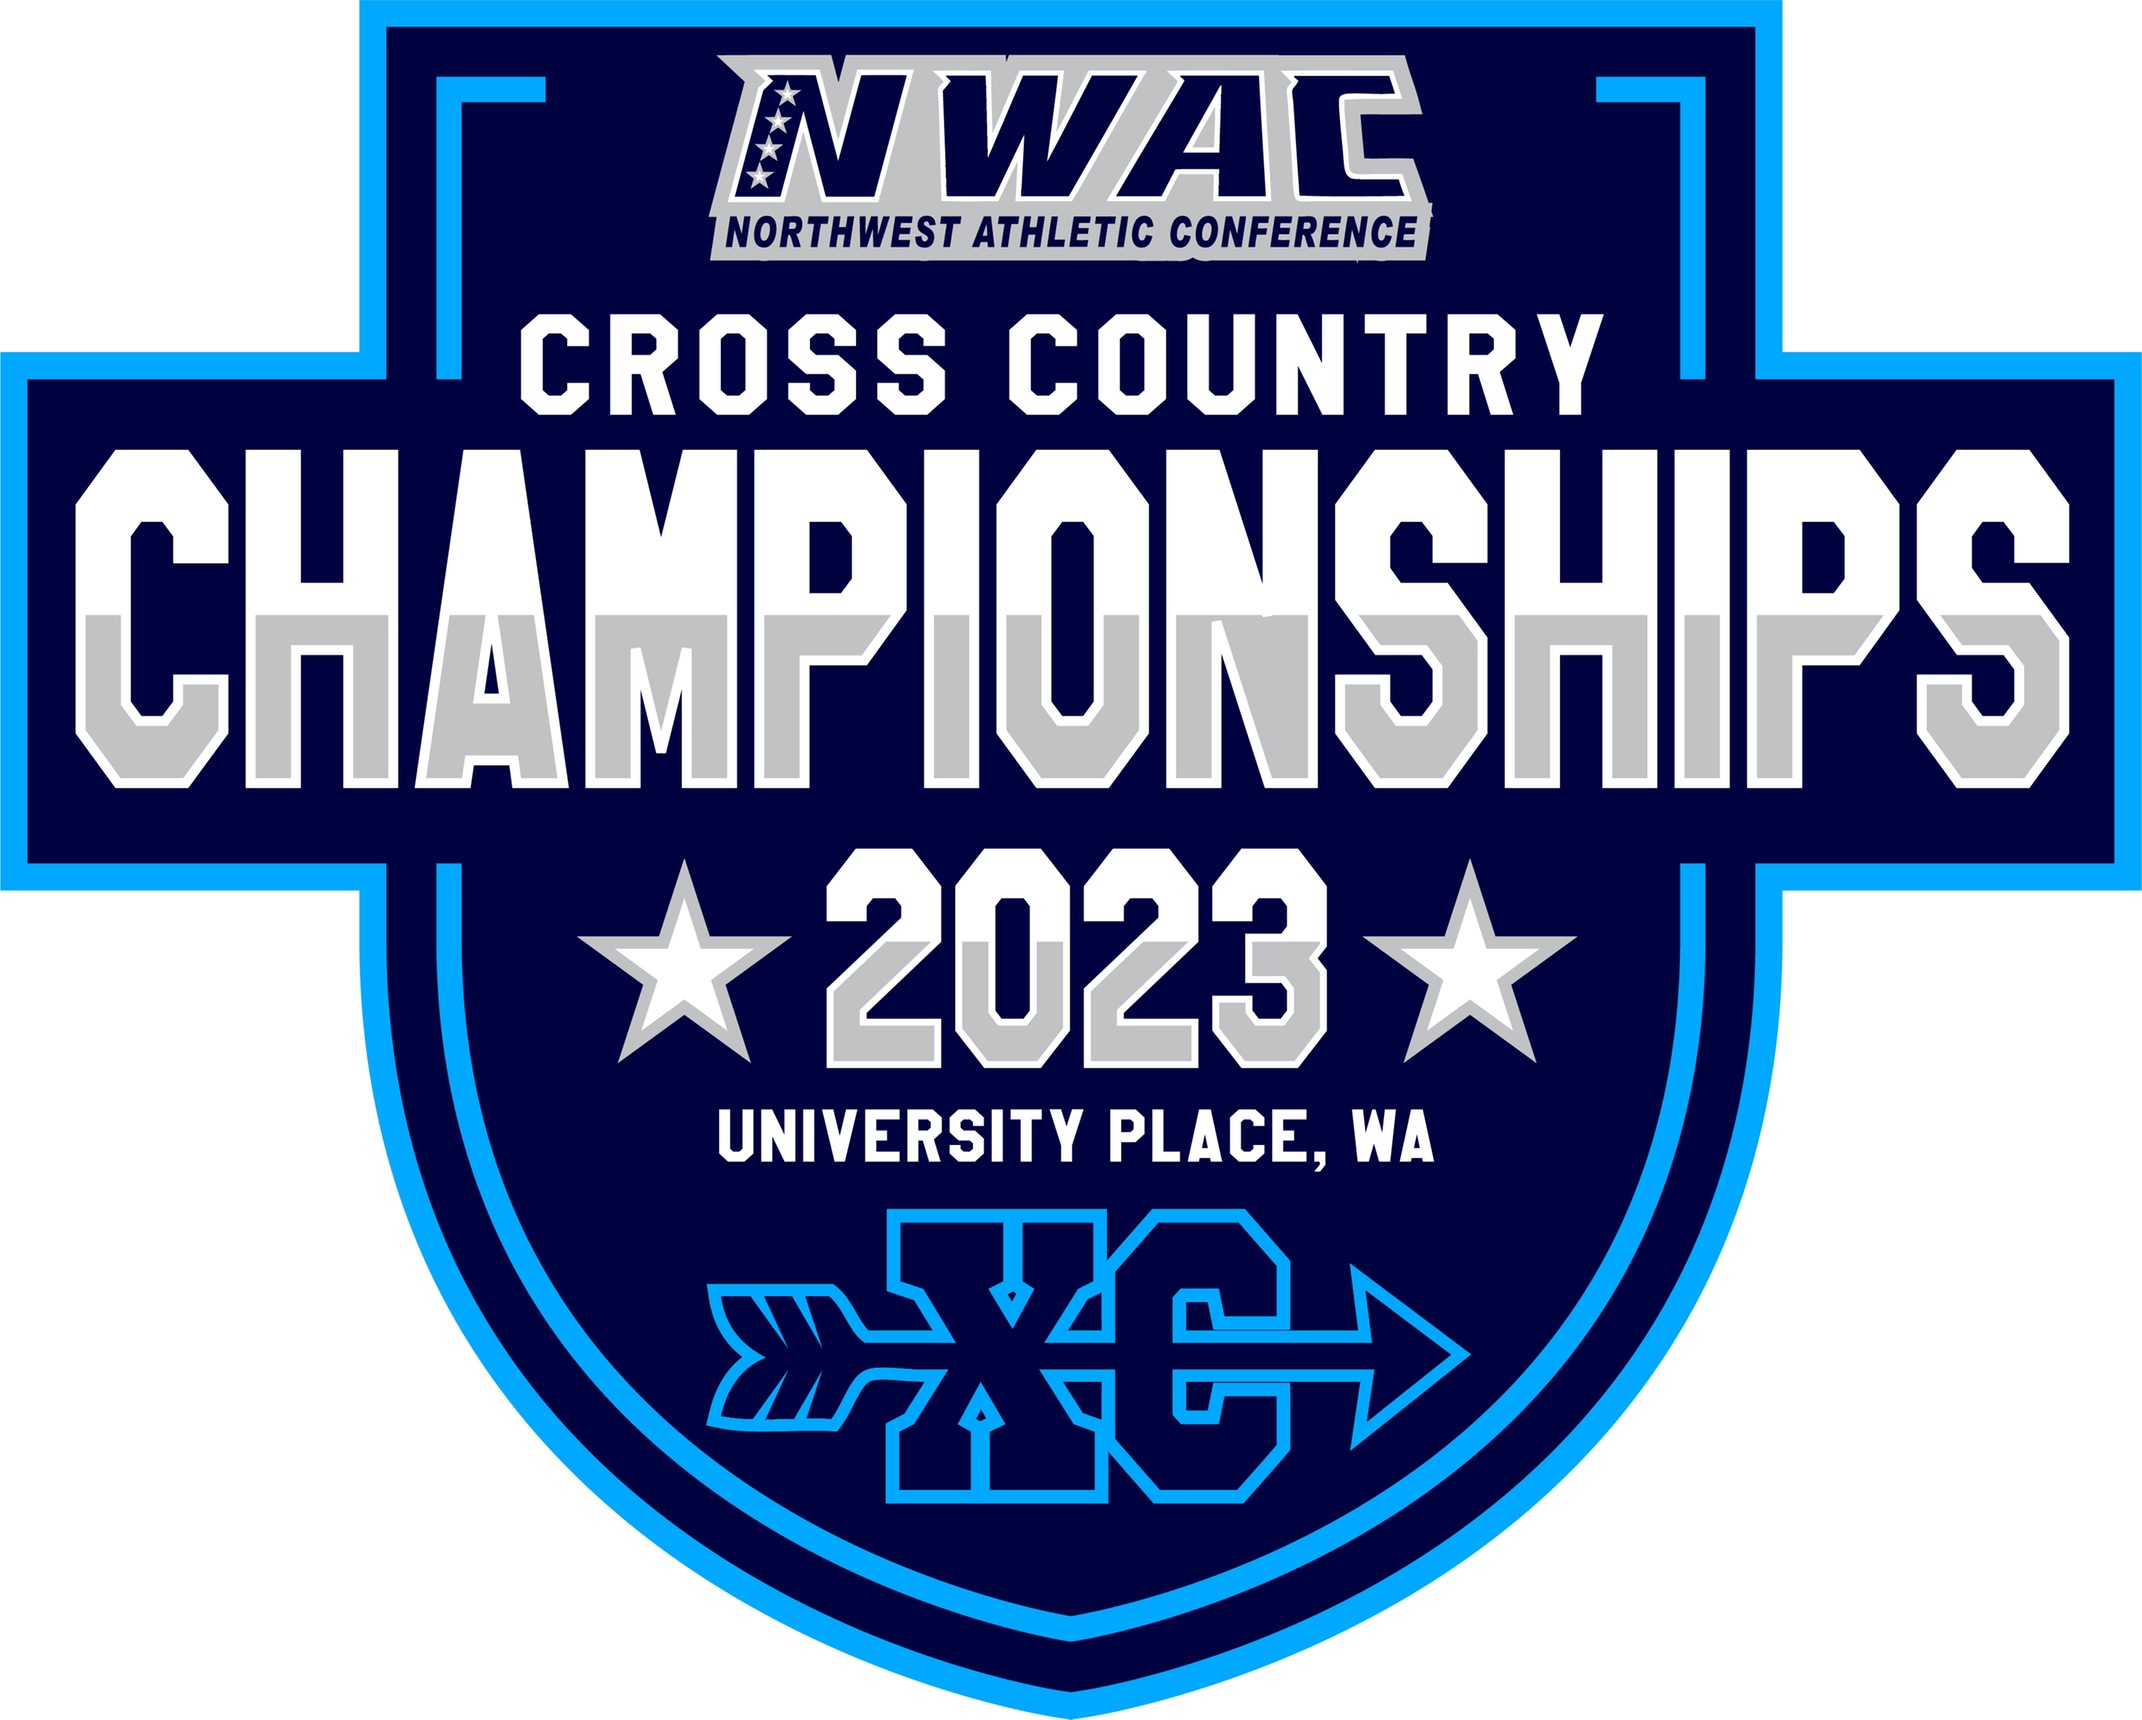 2023 NWAC Cross Country Championships logo